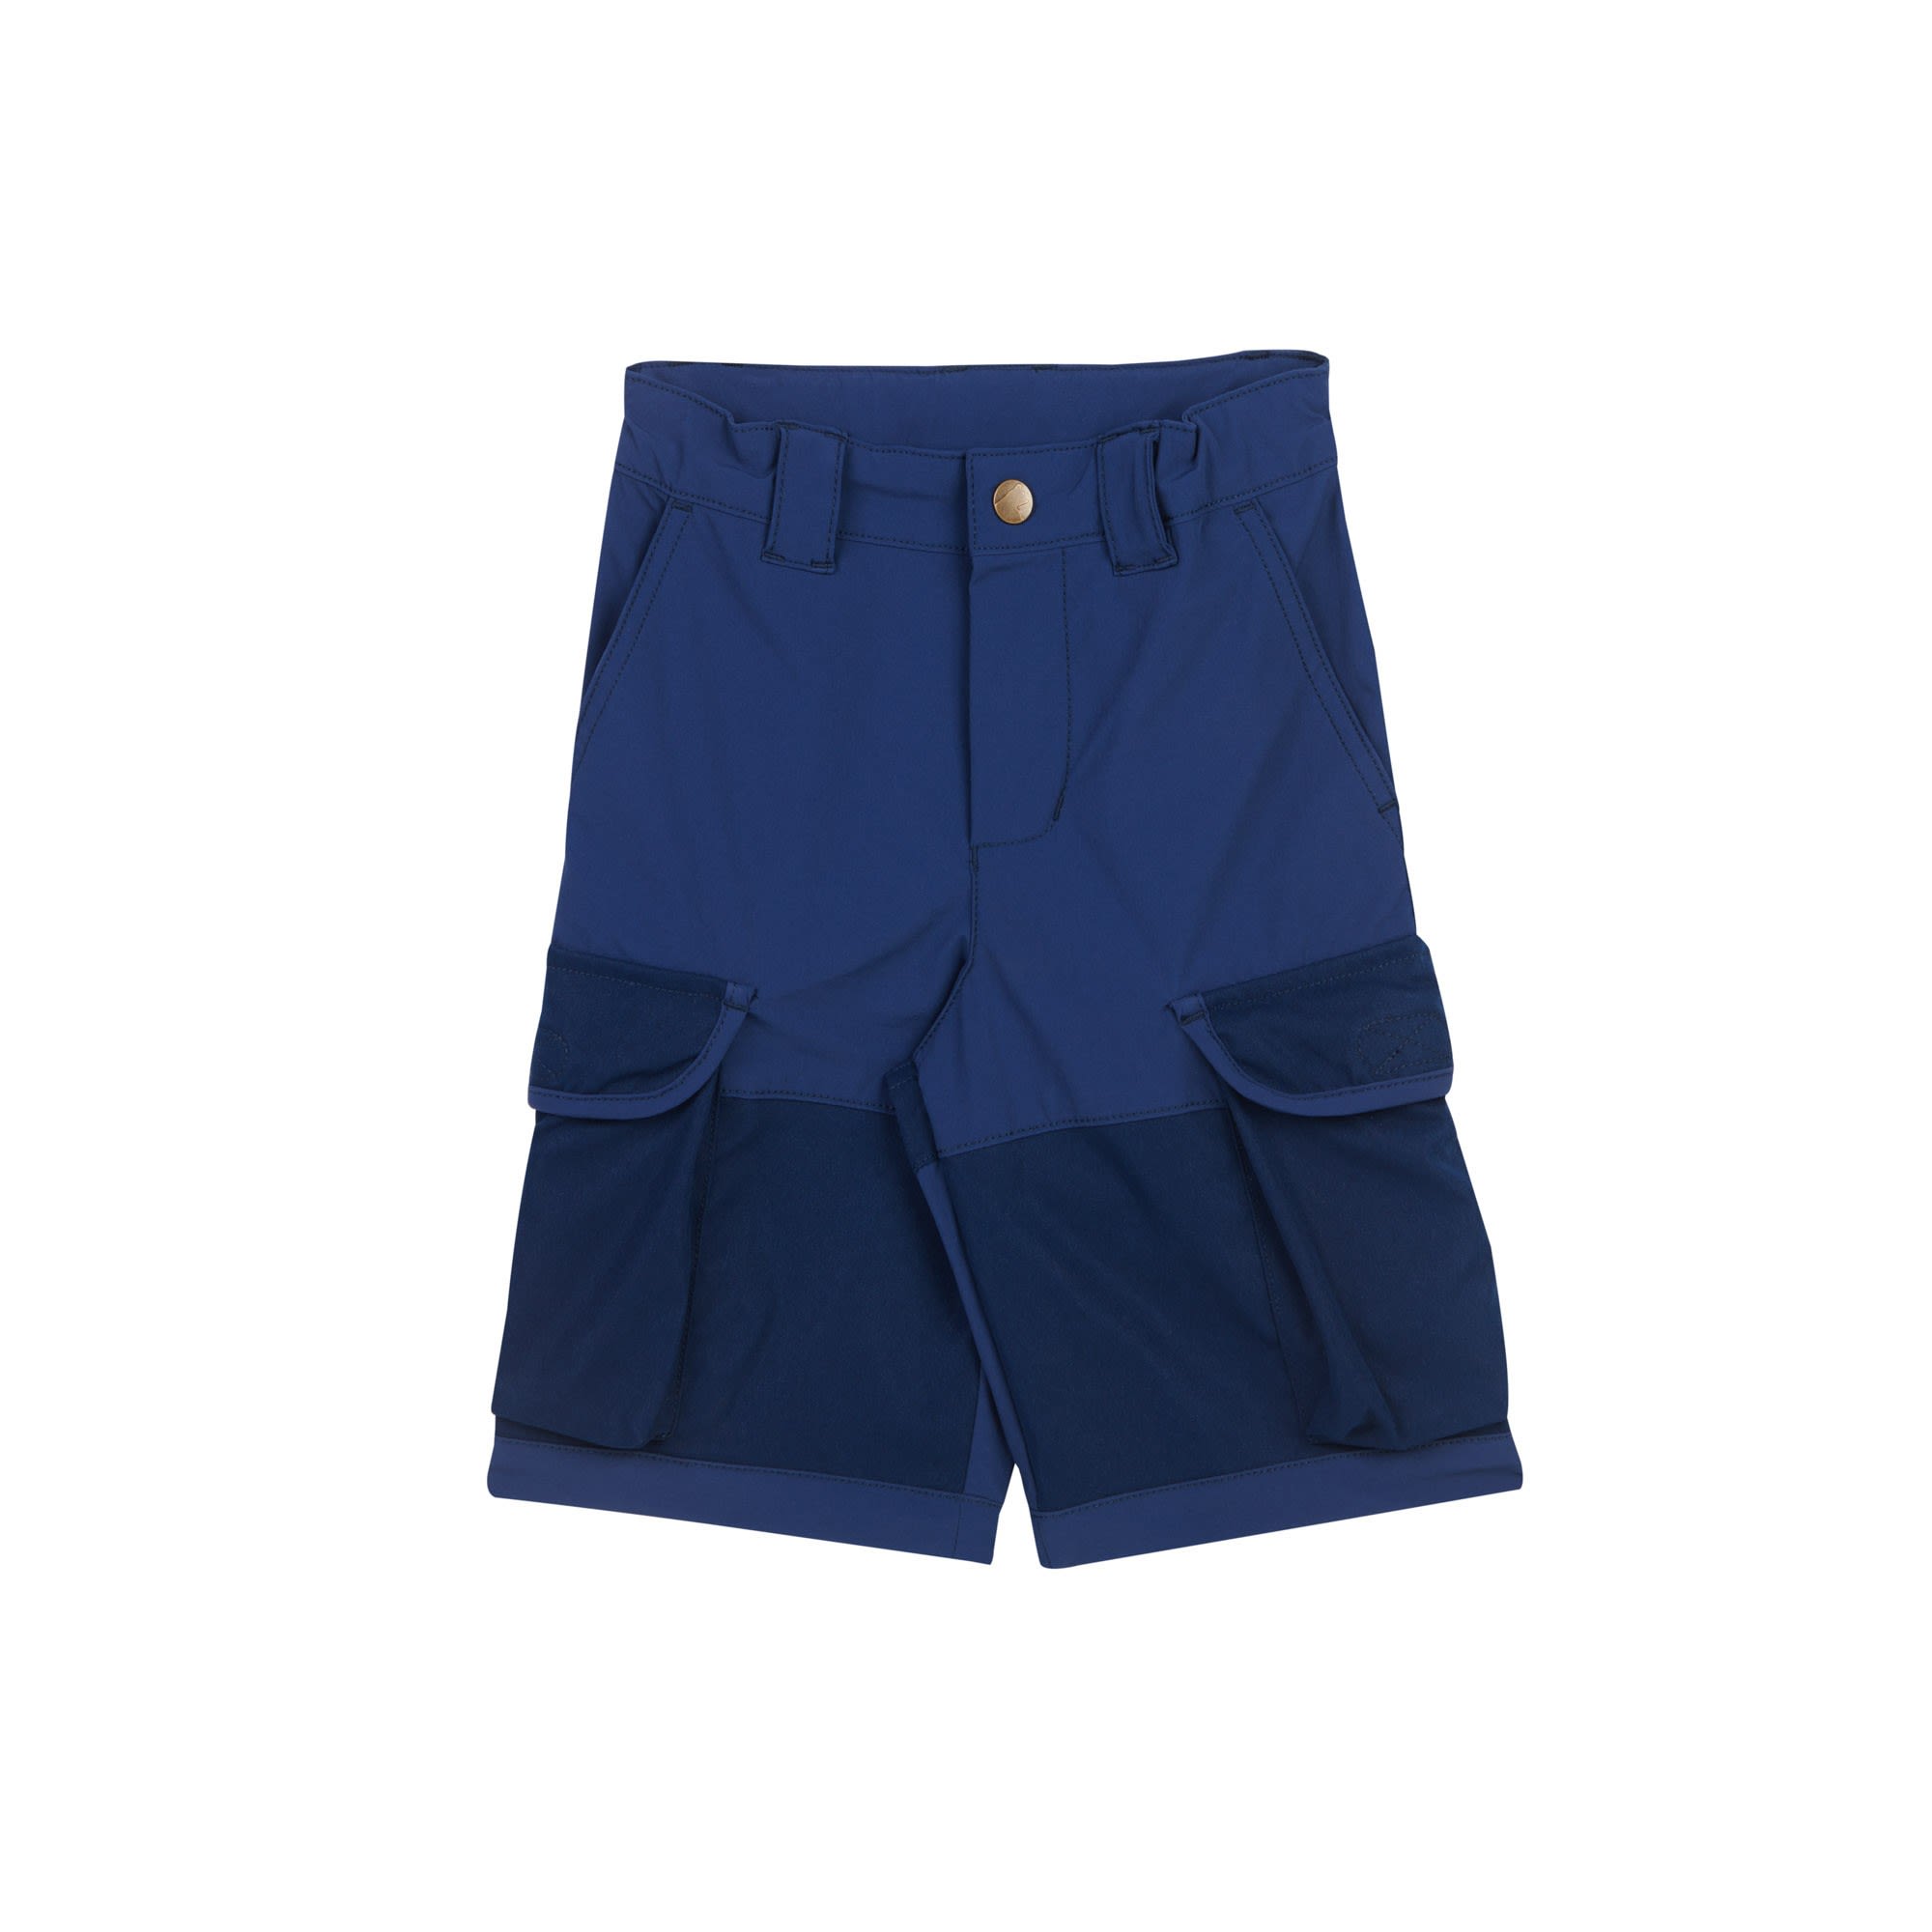 Finkid Orava Blau- Shorts- Grsse 80 - 90 - Farbe Navy